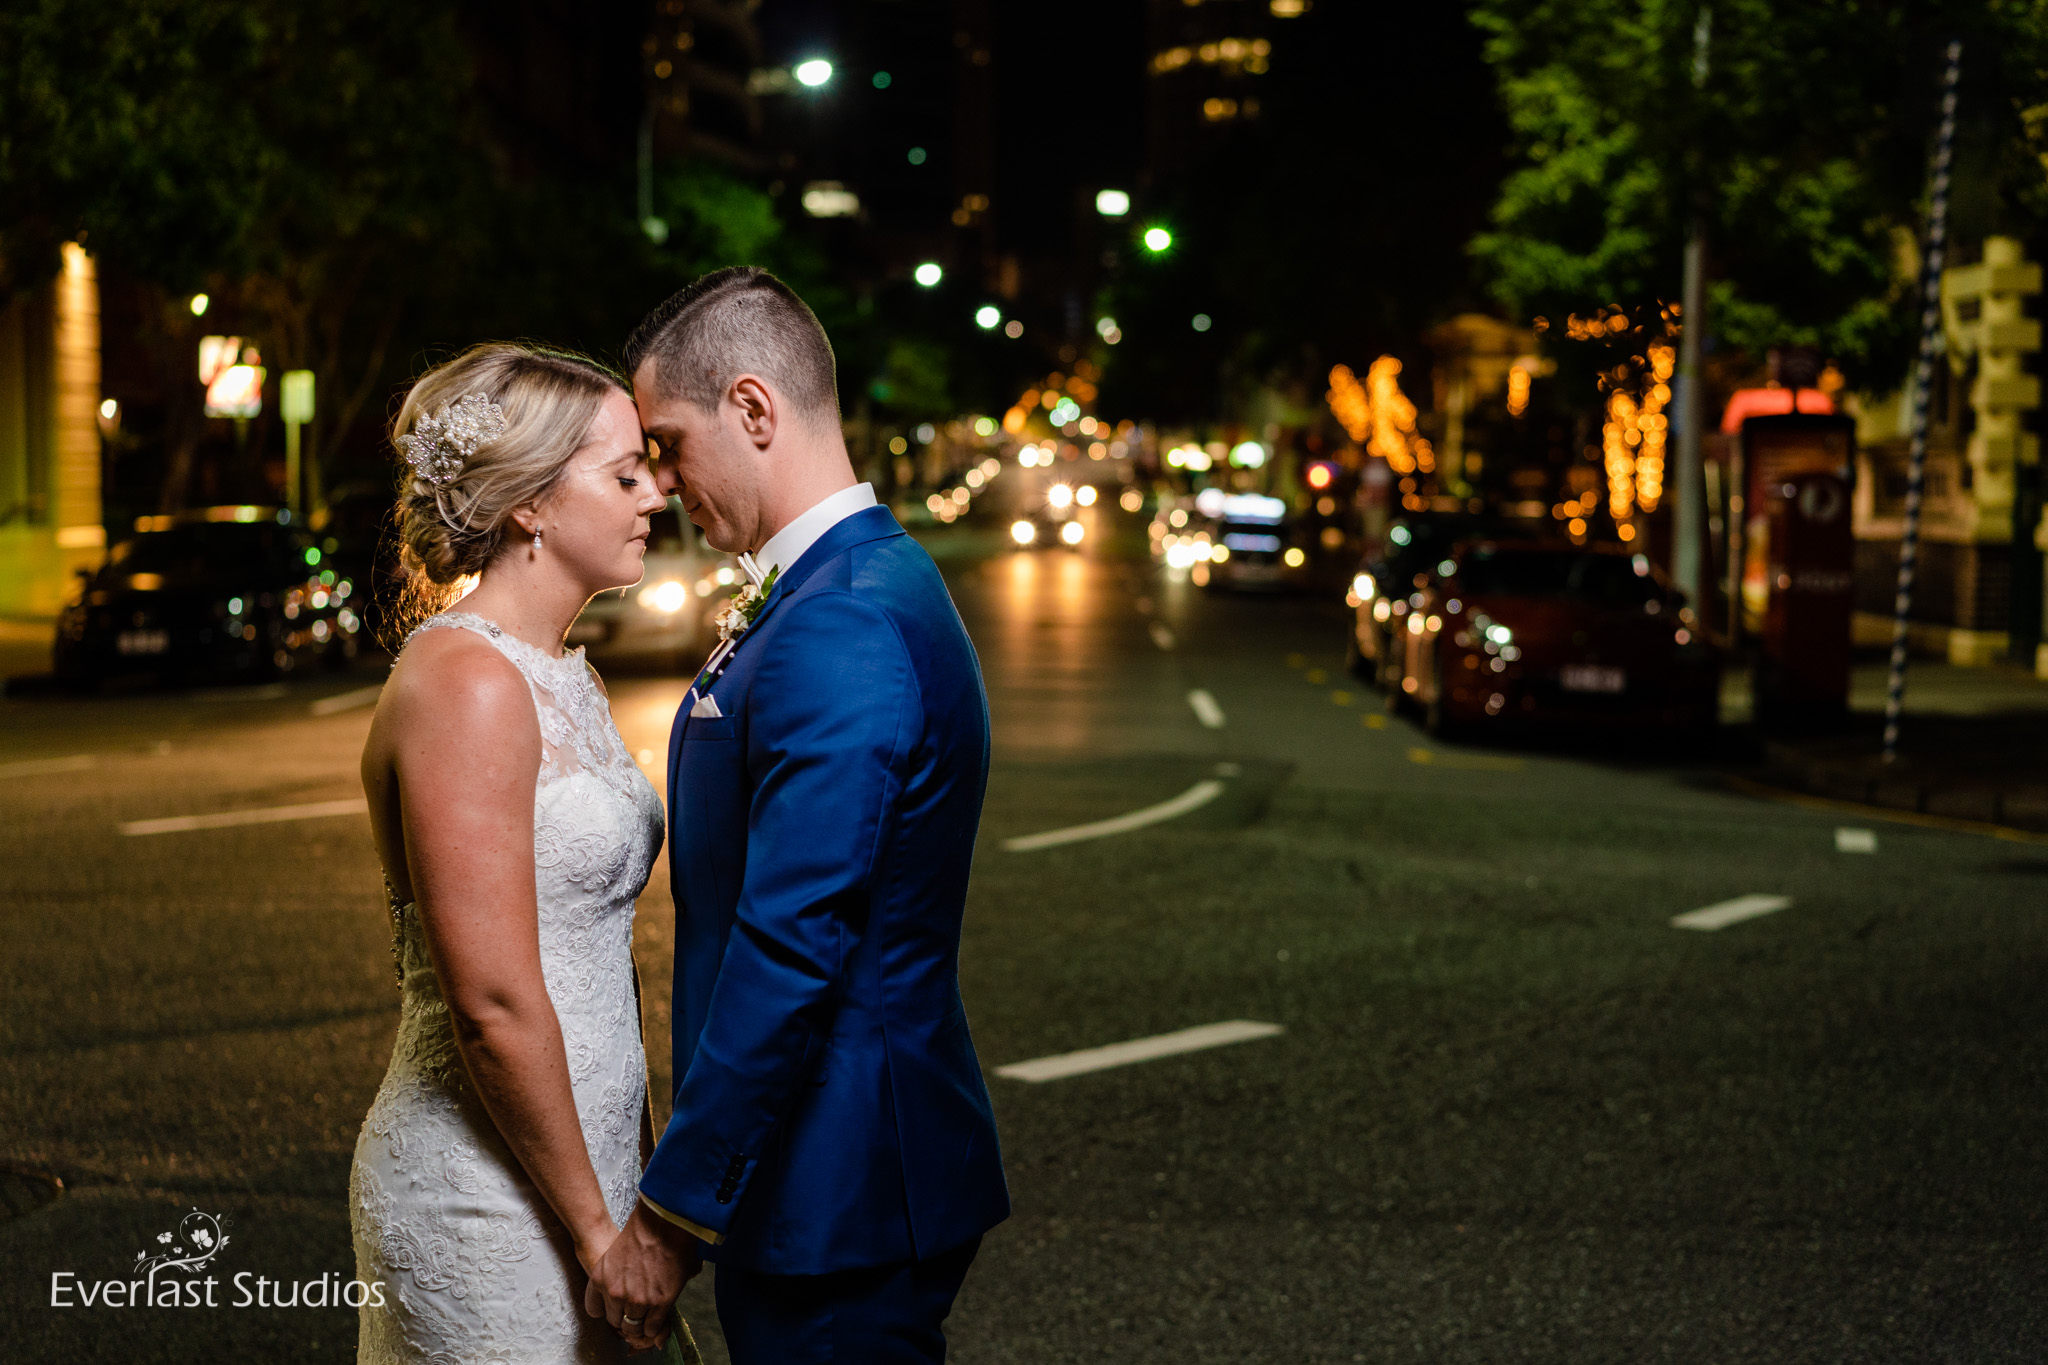 Night wedding photography Brisbane City